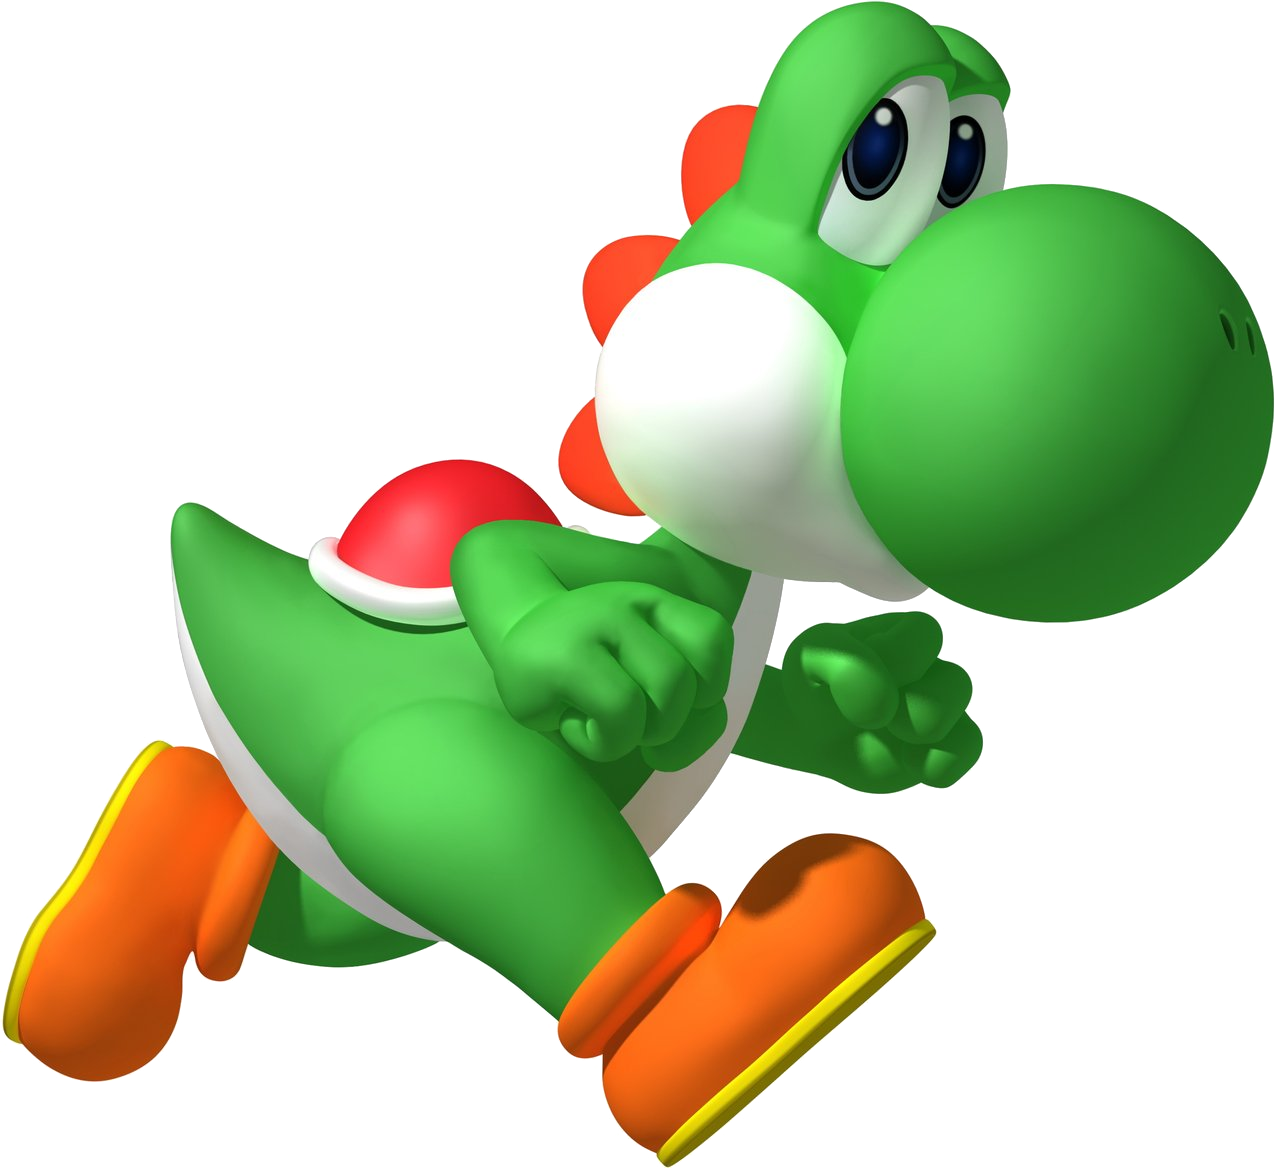 Super Mario PNG Image